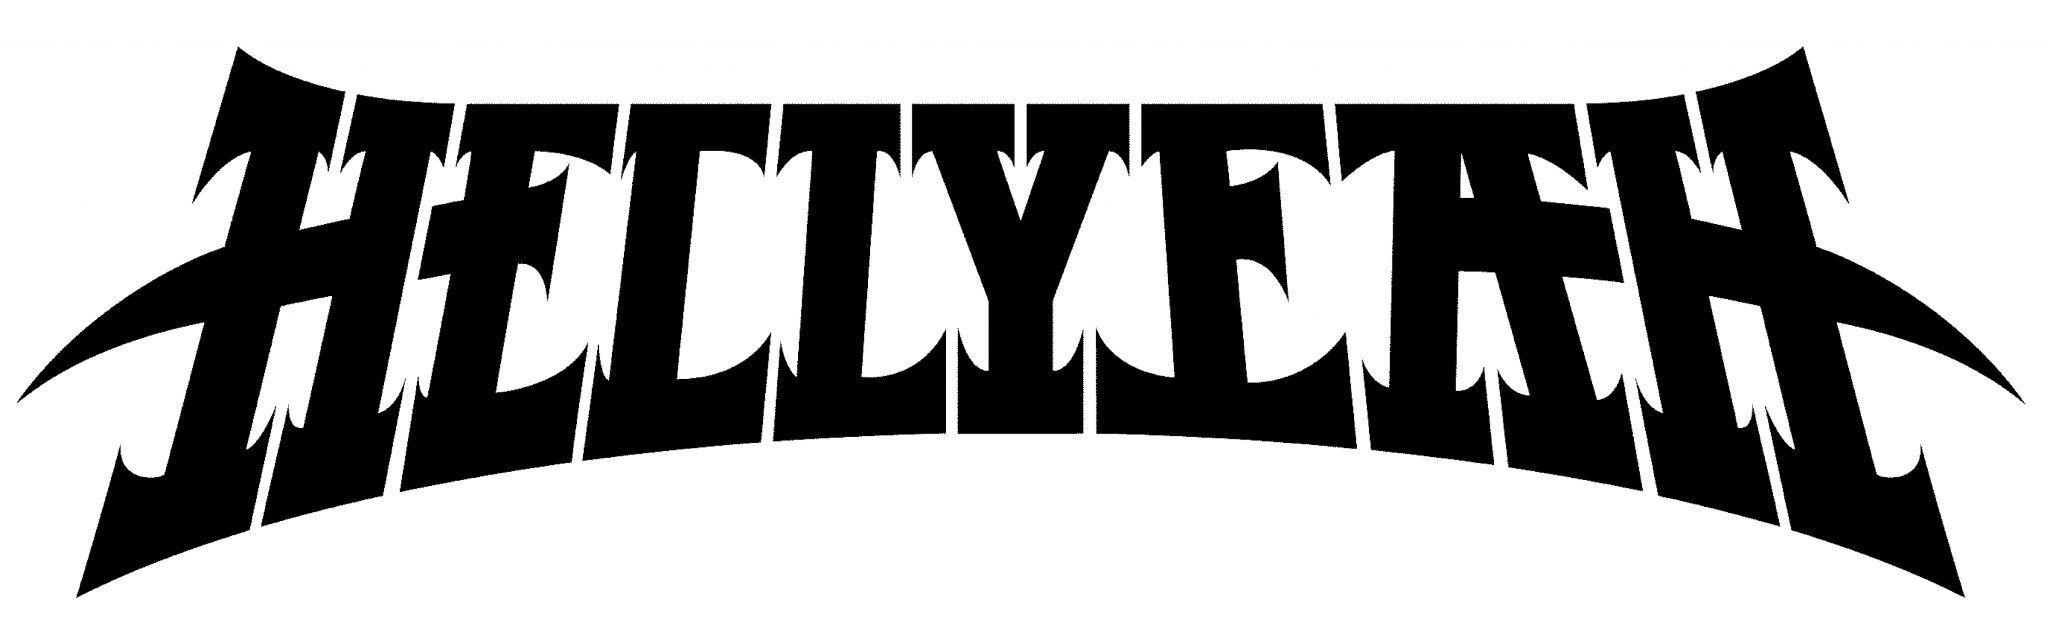 Hellyeah Logo - hellyeah logo ghostcultmag | Ghost Cult Magazine